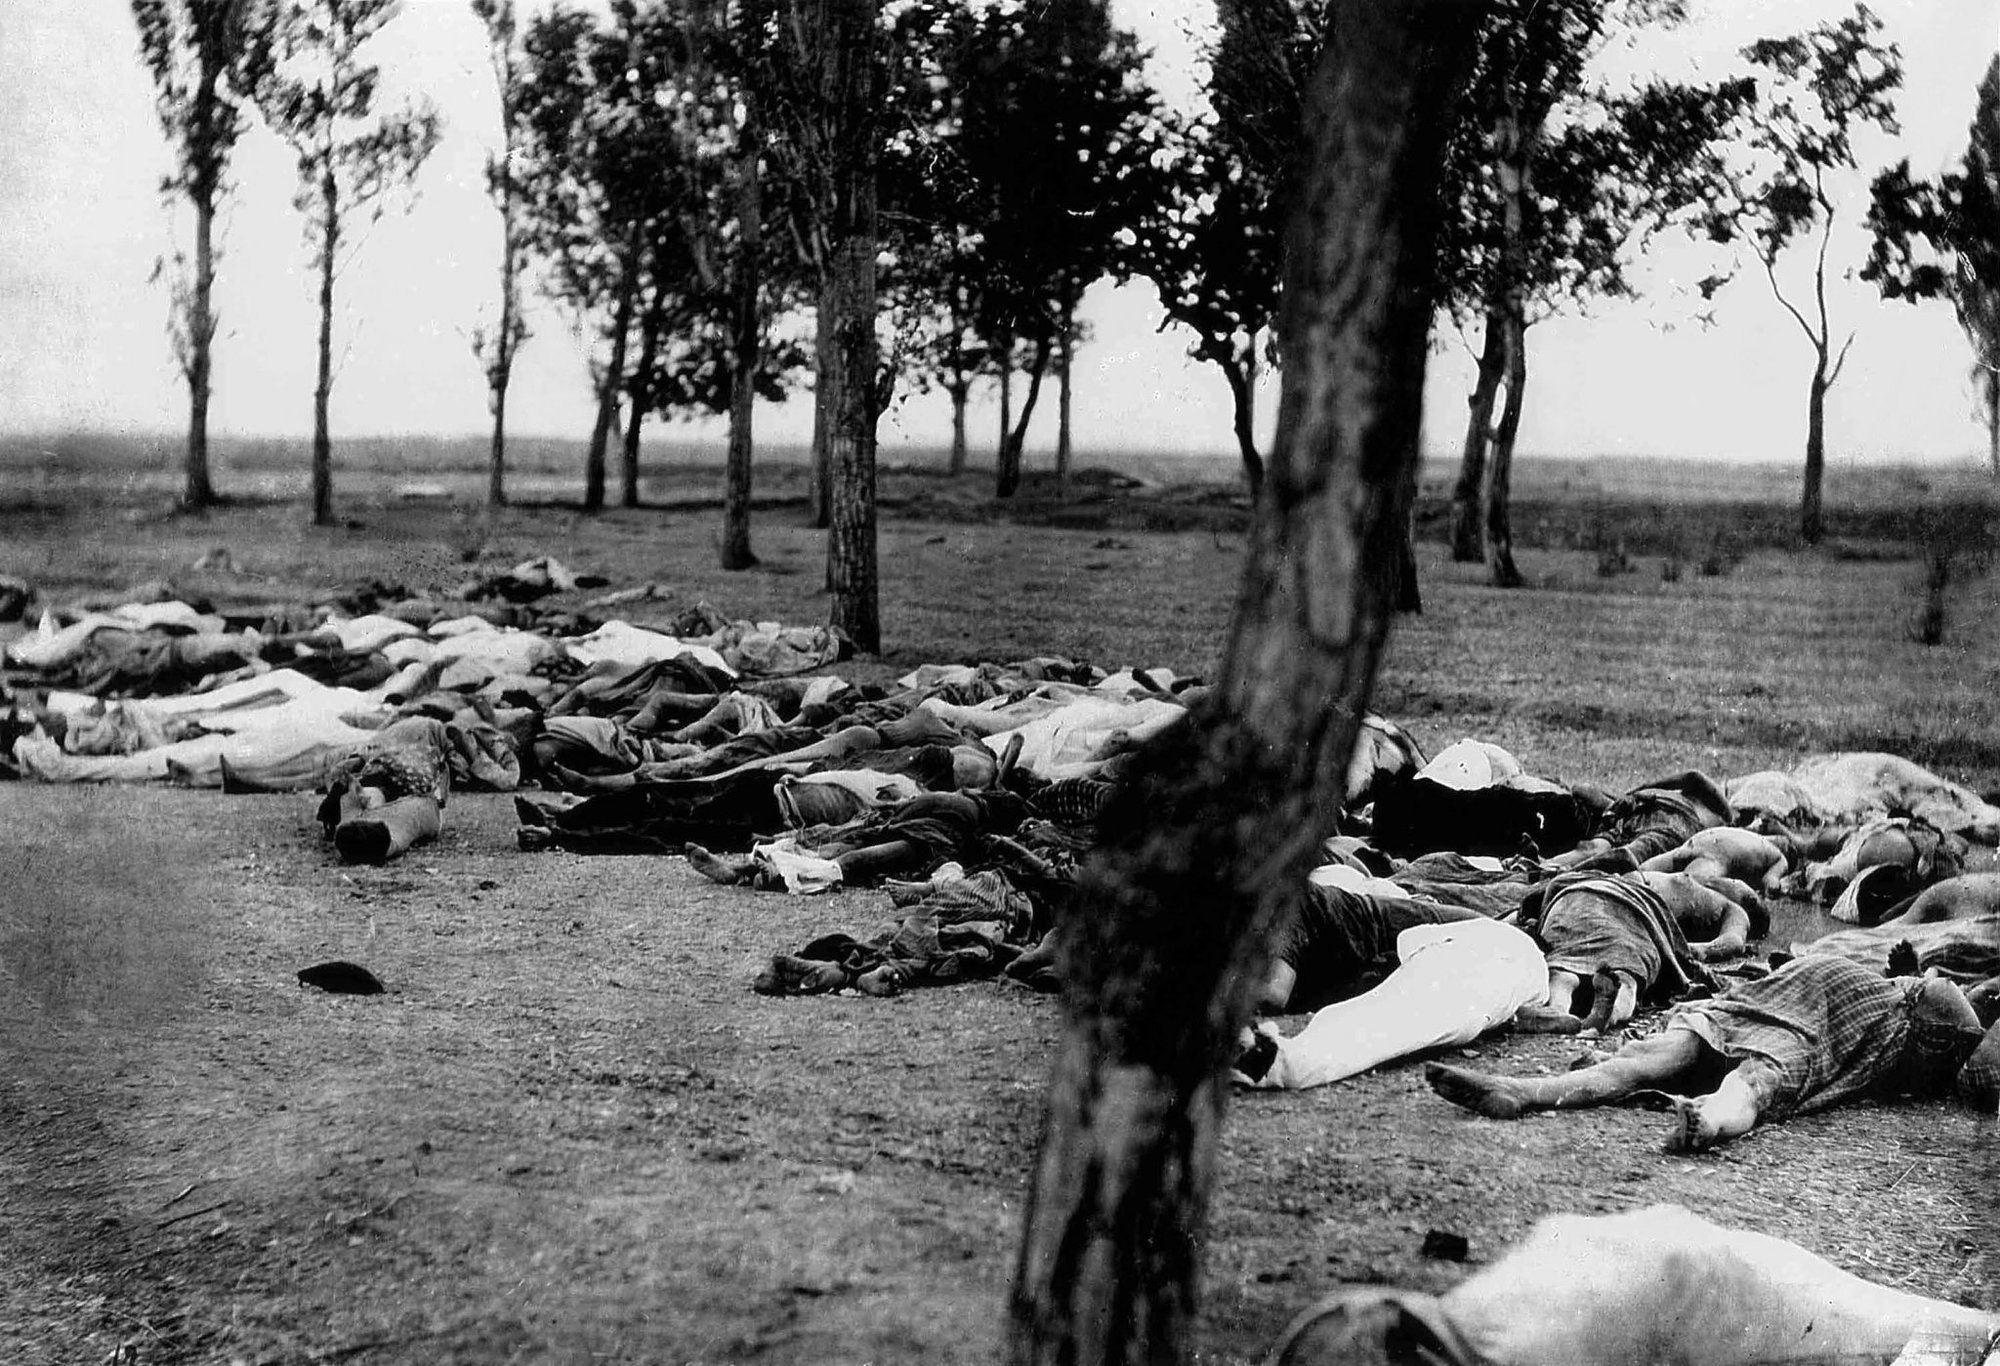 Ottoman Empire massacre of Armenians